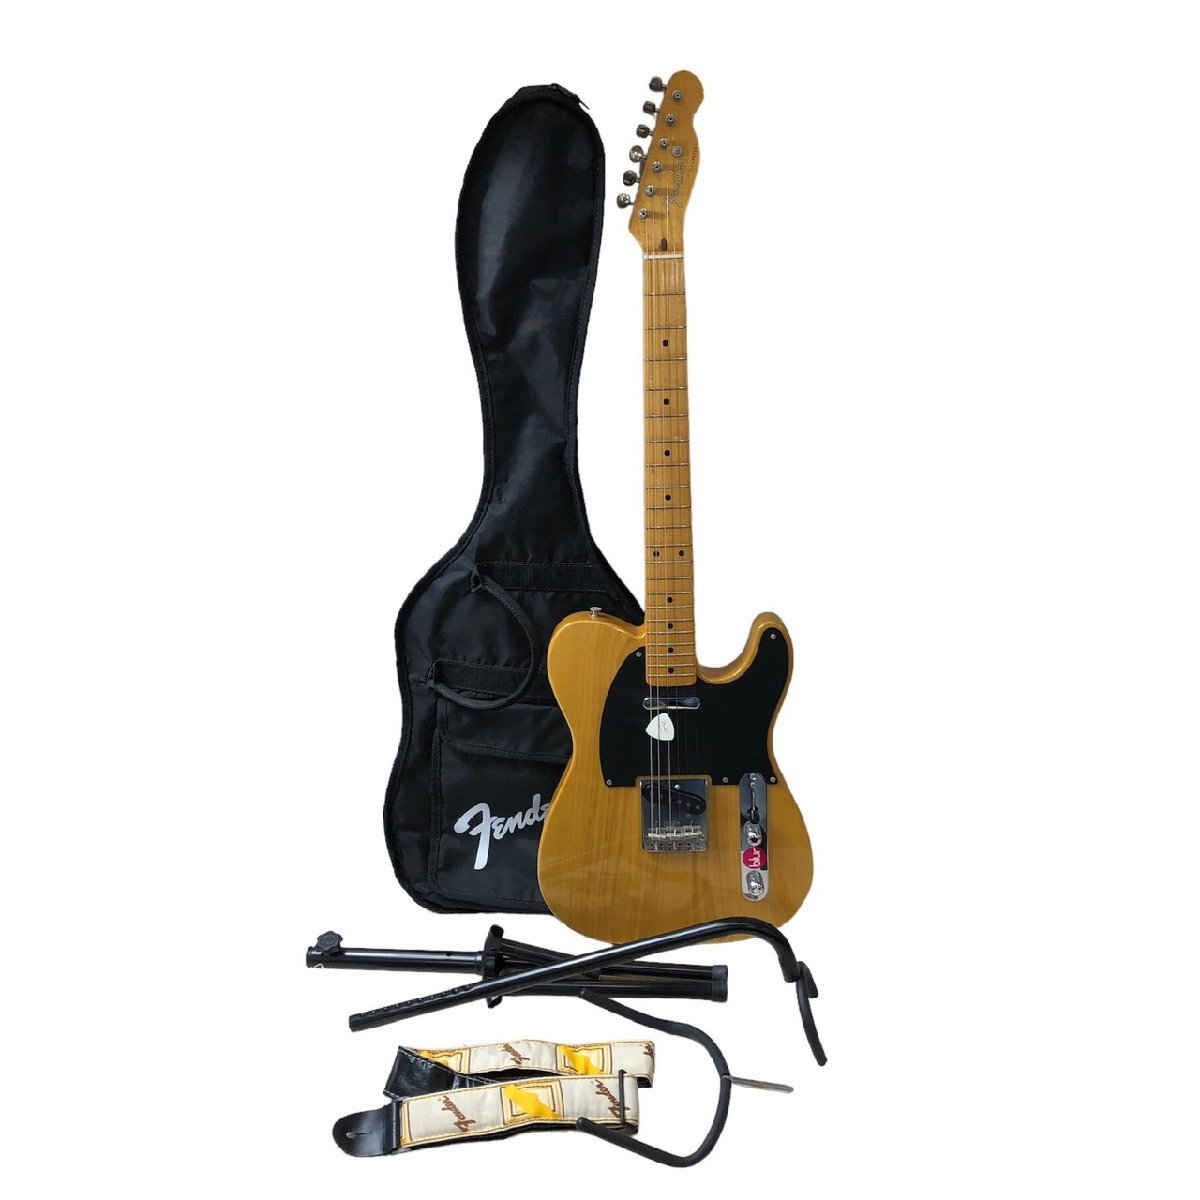 USED Fender フェンダー エレキギター TELECASTER テレキャスター 音出確認済 弦楽器 日本製 1997-2000年製 ギタースタンド付属 演奏